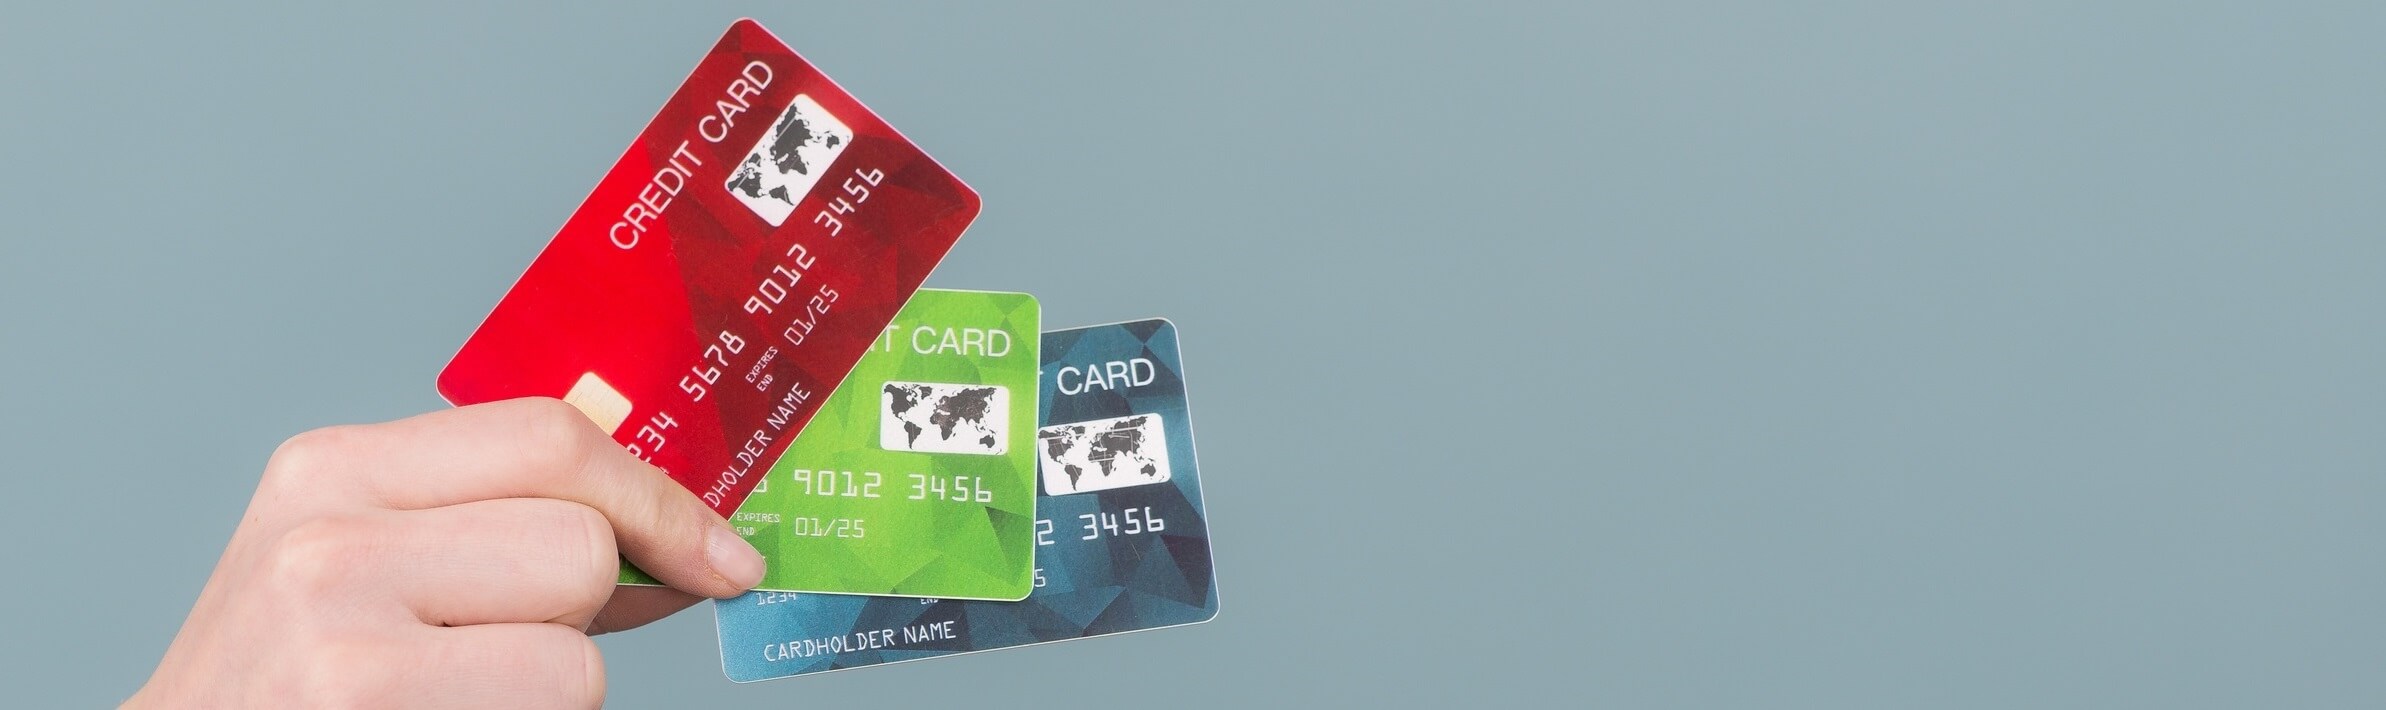 Bezahlen bei Primark - Girocard ✓ Kreditkarte ✓ Kontaktlos